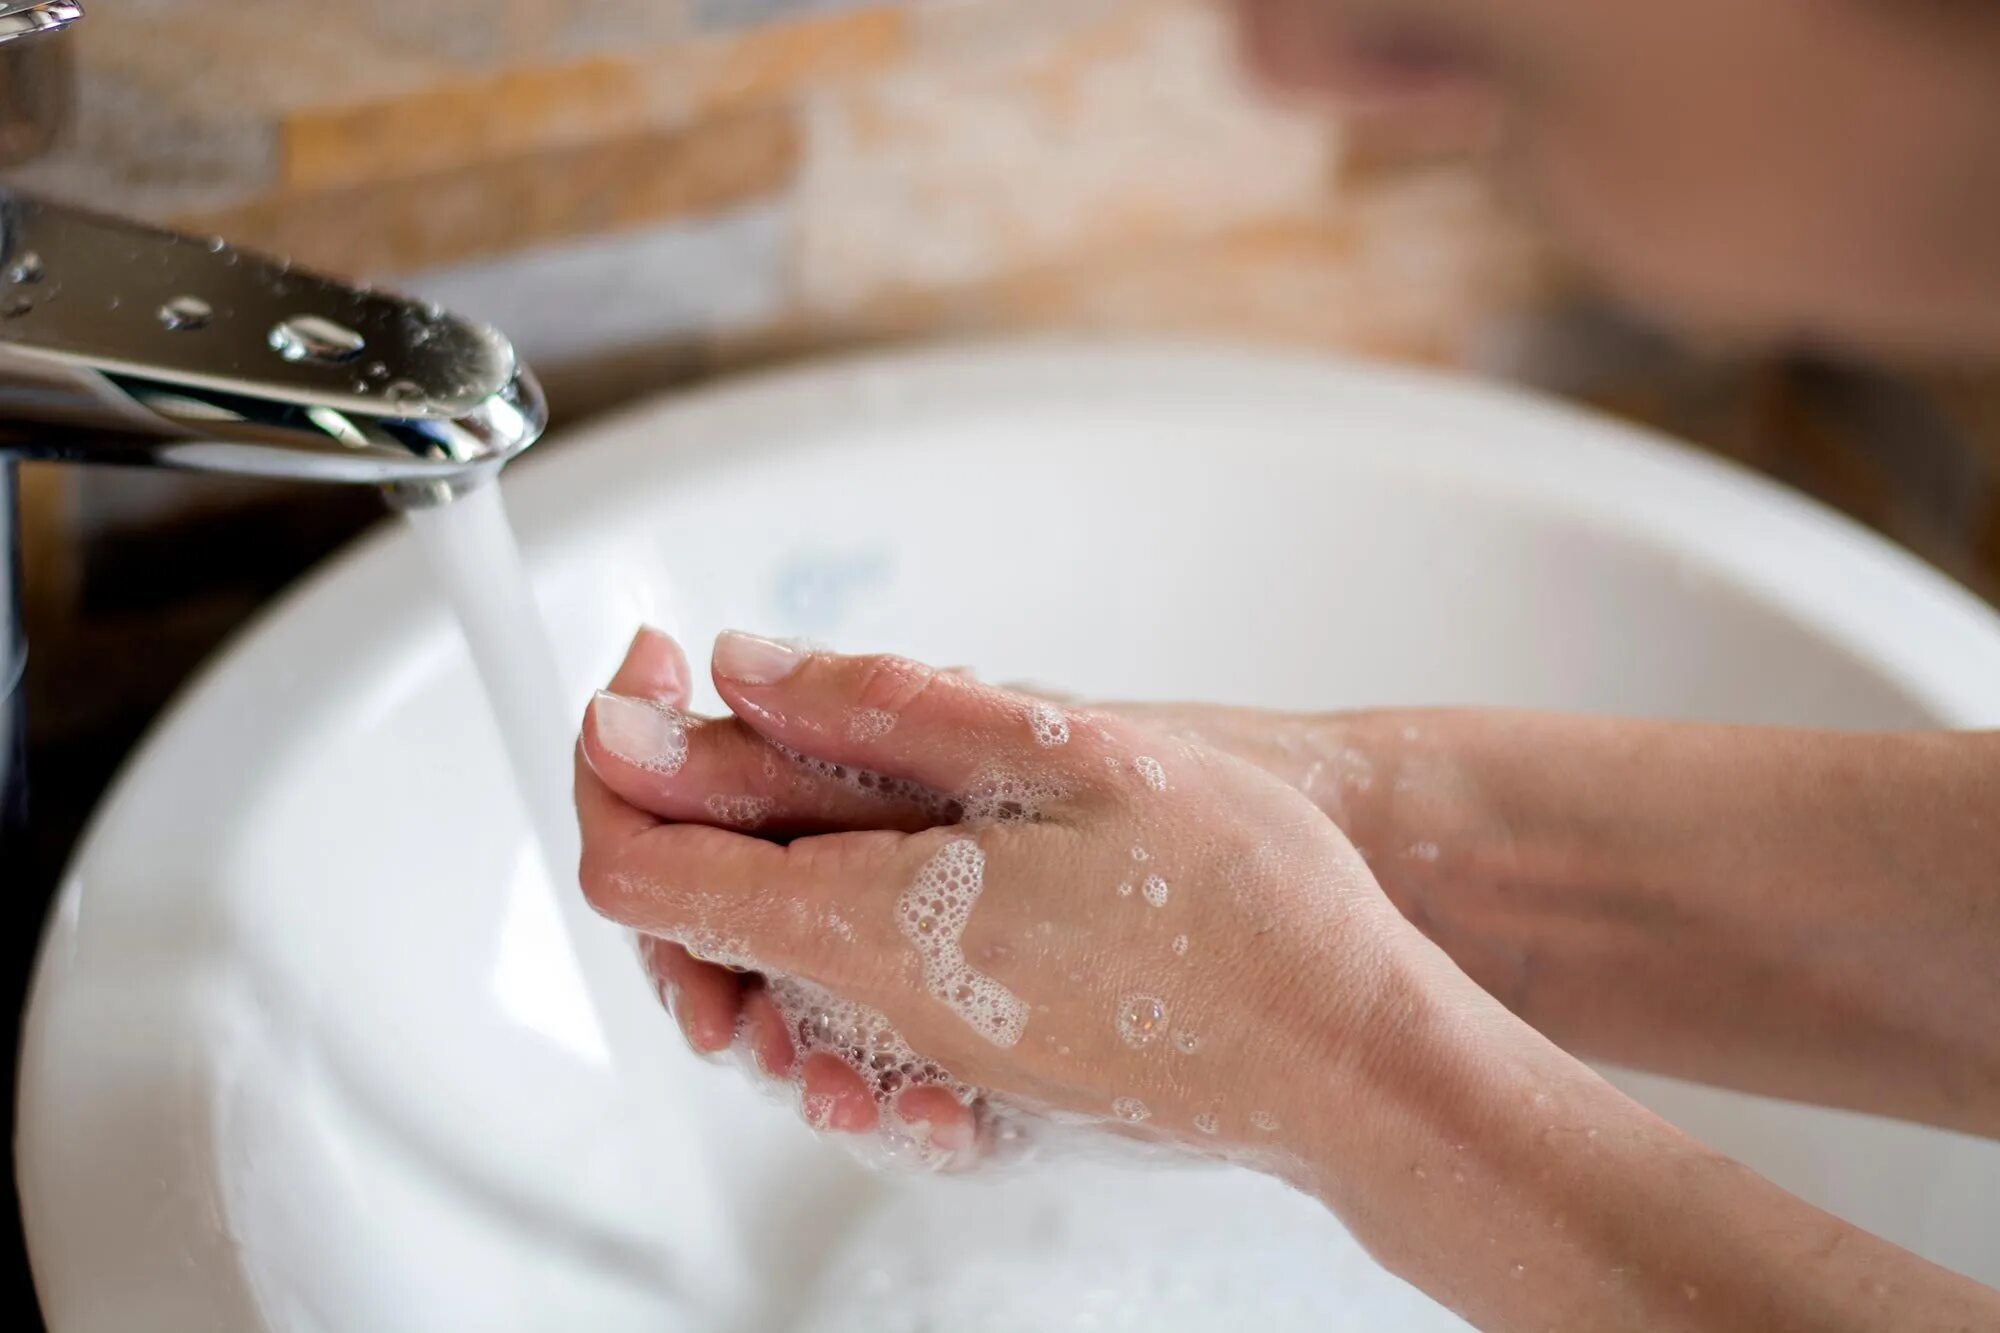 Мытье рук. Мыло для рук. Гигиена рук. Гигиена мытья рук.